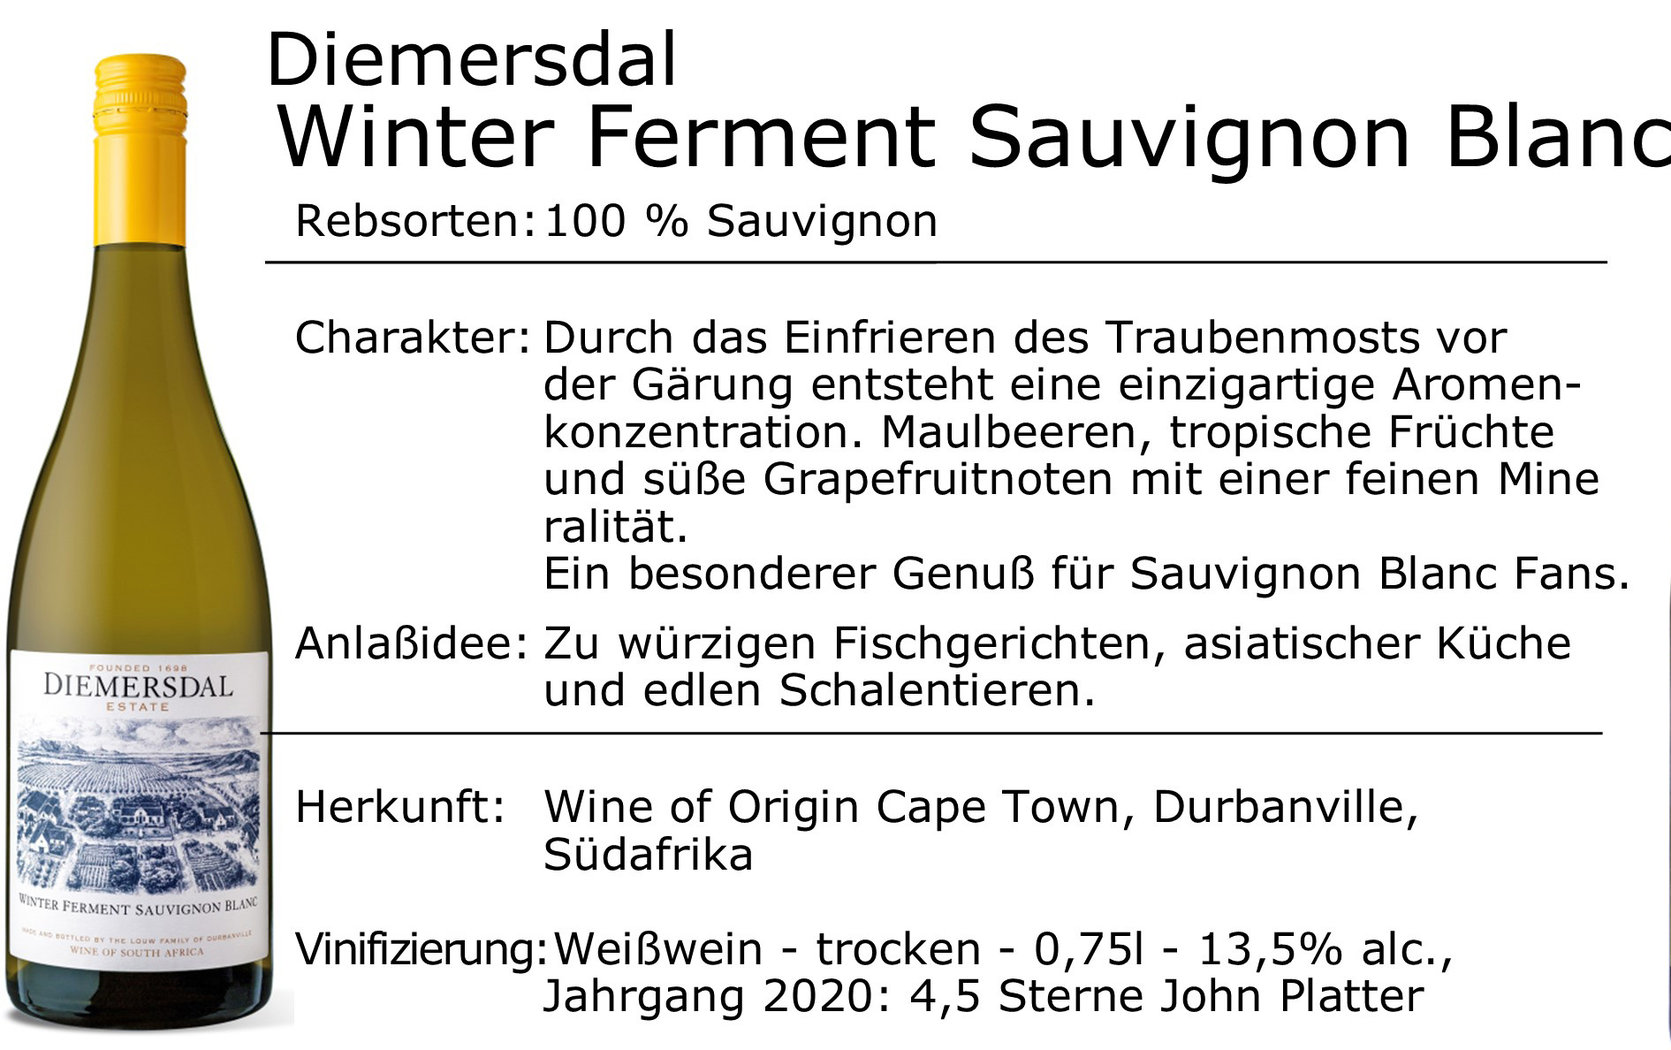 Diemersdal Winter Fermented Sauvignon Blanc 2020